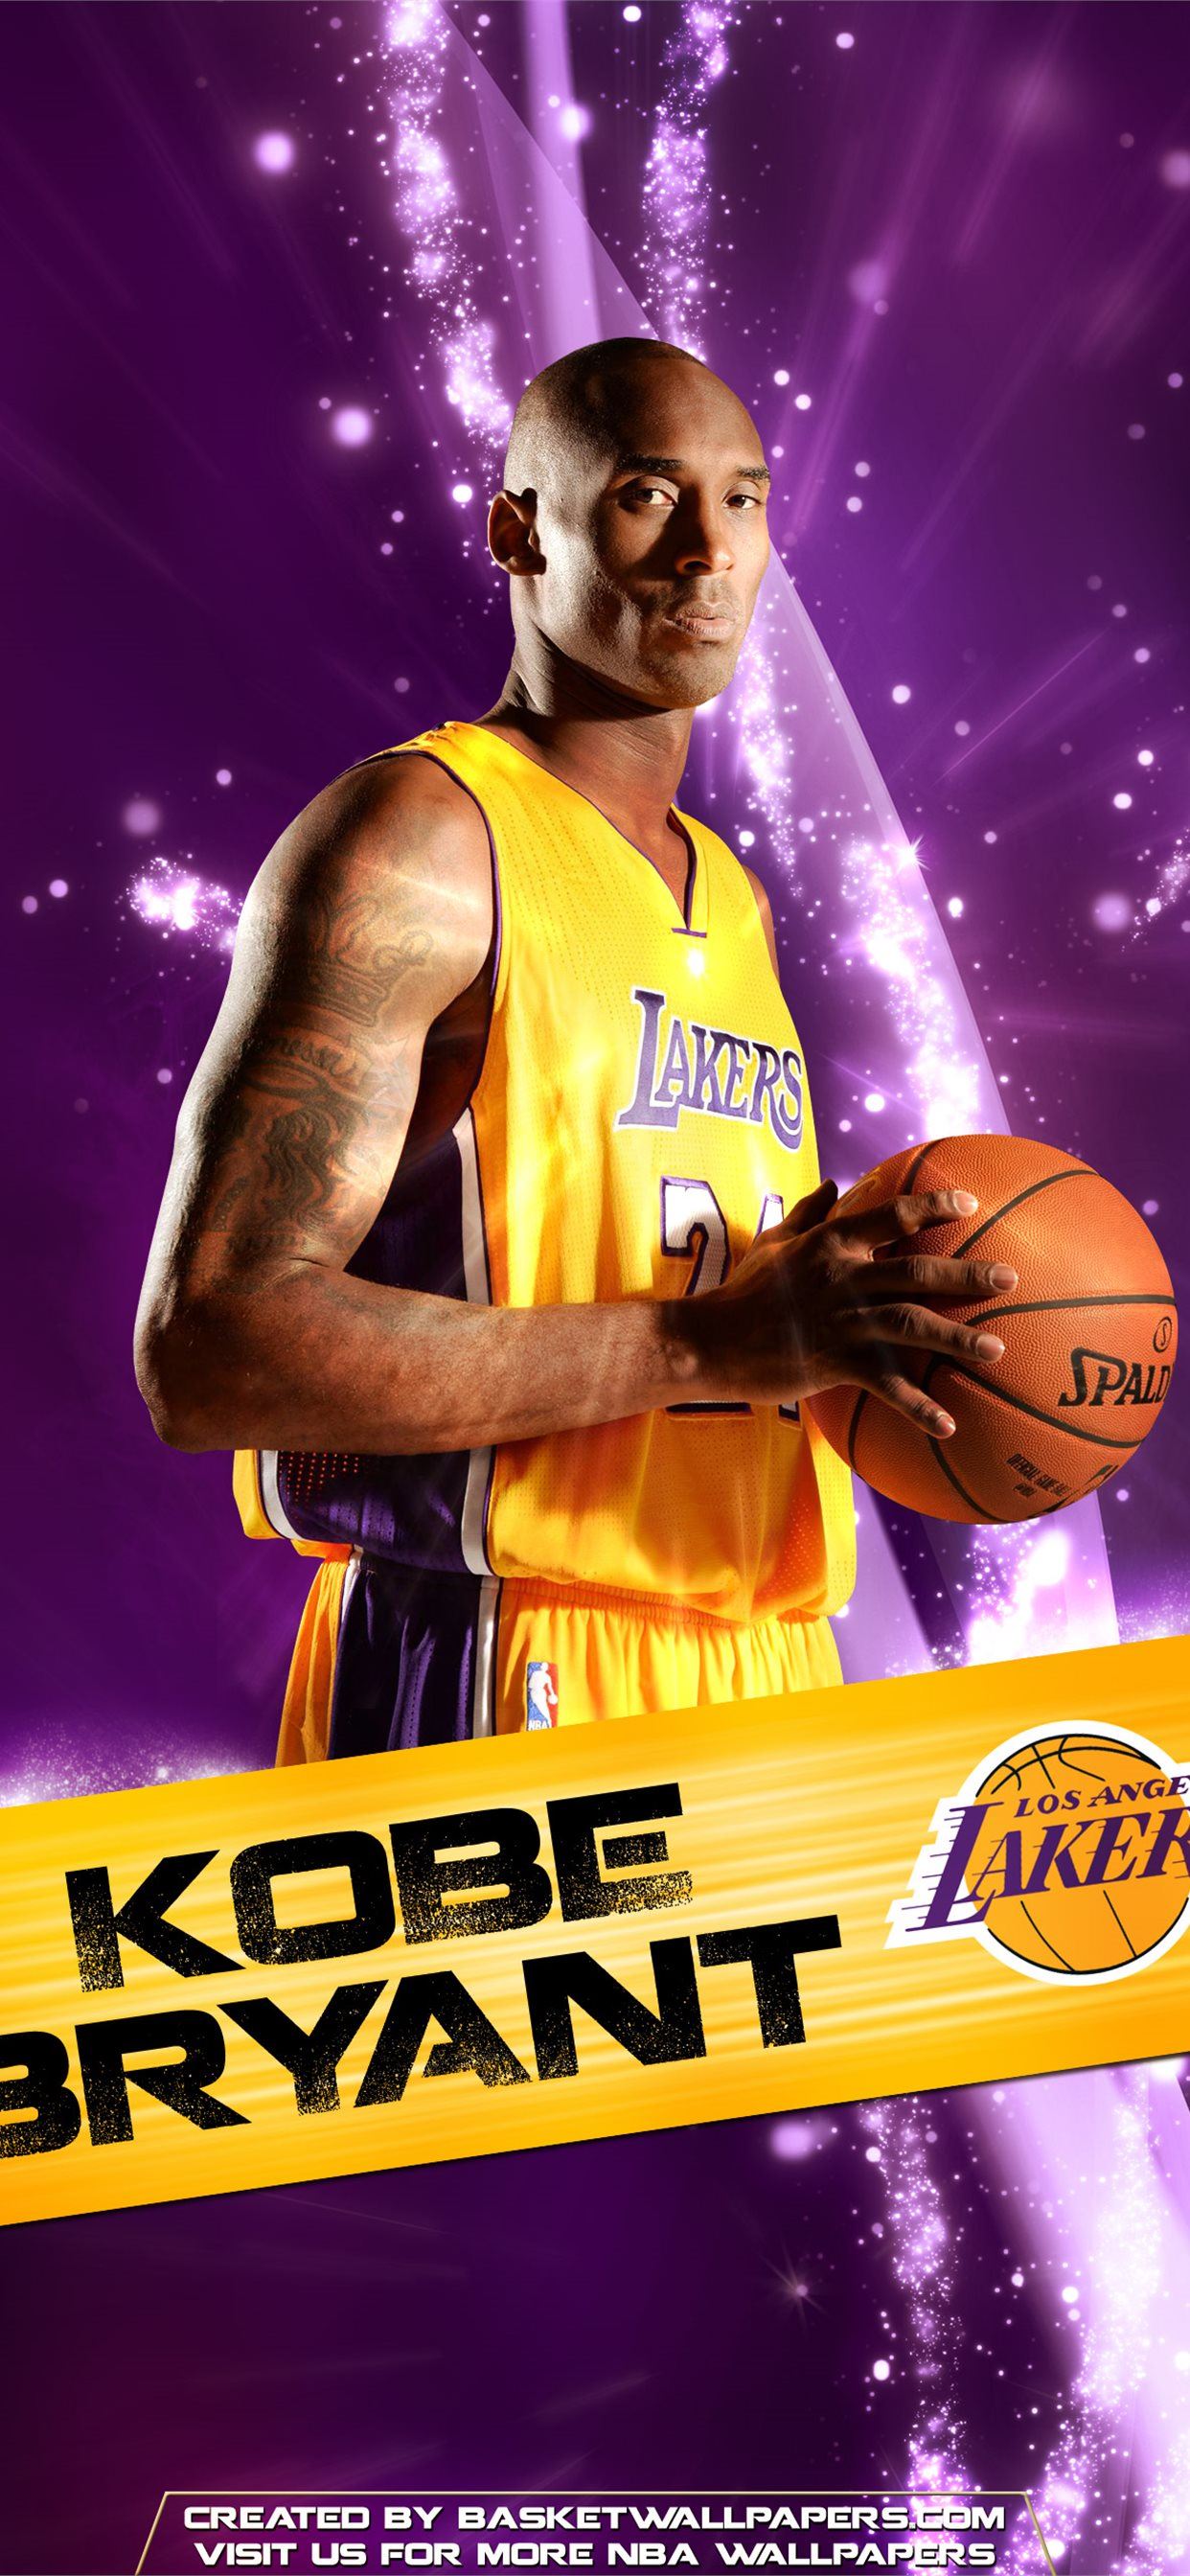 NBA Wallpapers on Twitter Beautiful wallpaper of Kobe Bryant full size  2880x1800 pixels at  httpstcoAqXPHWKtTk  NBA KobeBryant  httpstcouWAxRTHw6g  Twitter